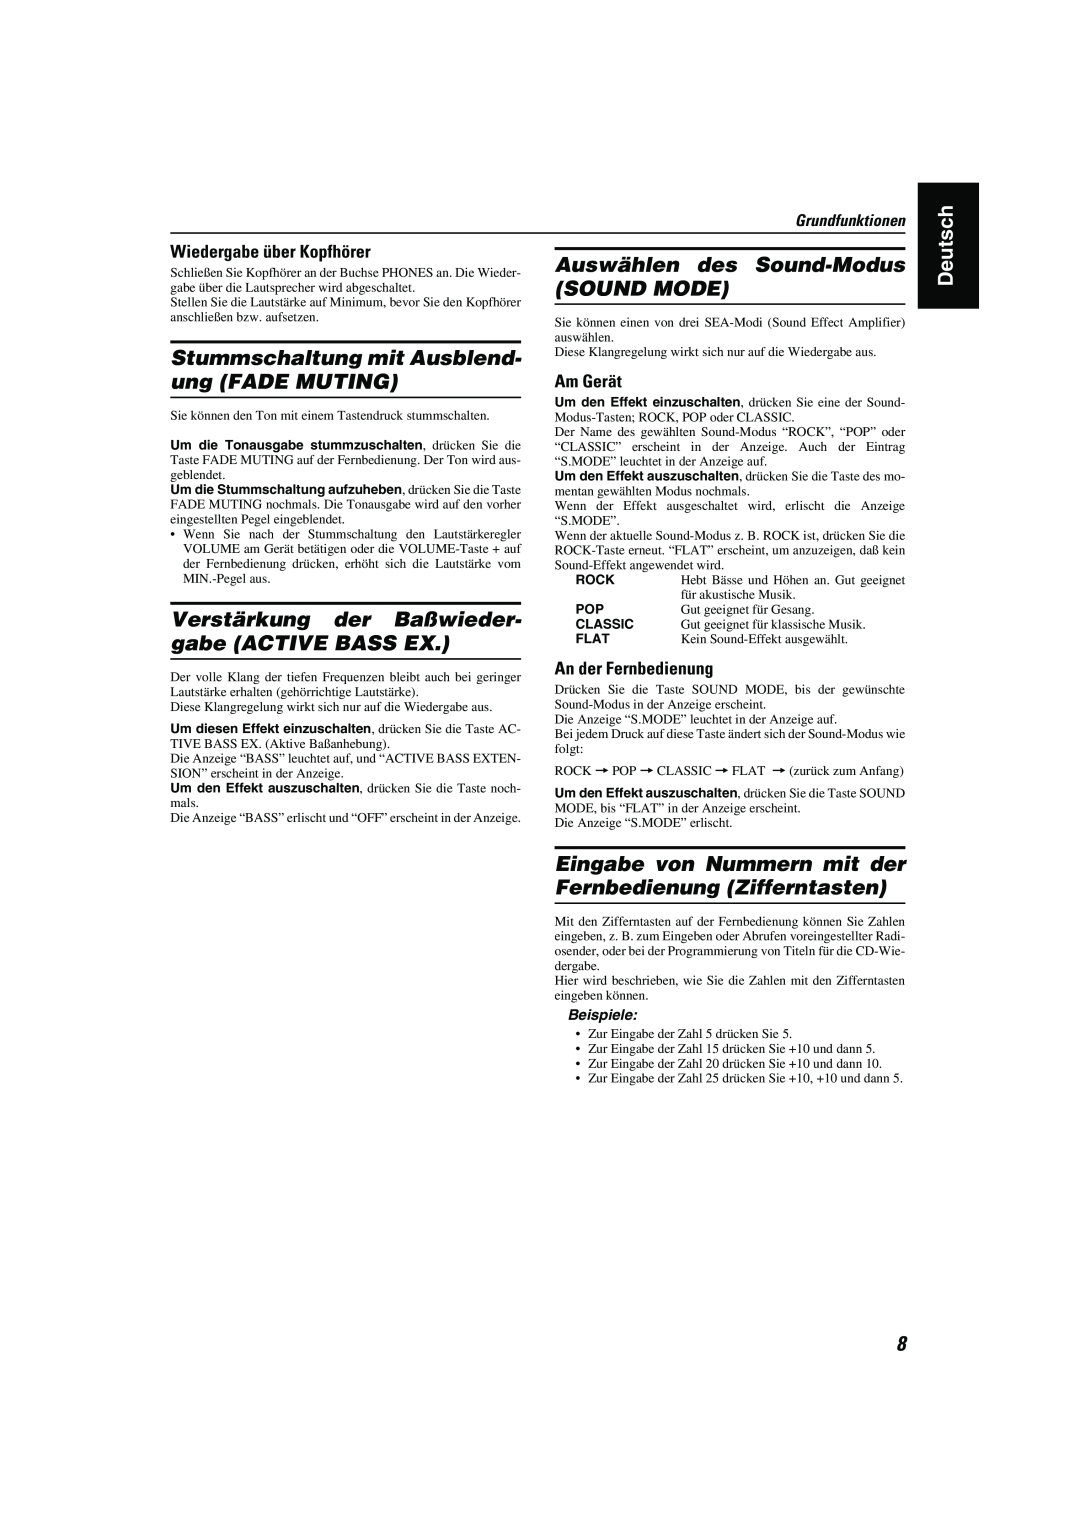 JVC CA-MXK10R manual Stummschaltung mit Ausblend- ung FADE MUTING, Verstärkung der Baßwieder- gabe ACTIVE BASS EX, Deutsch 